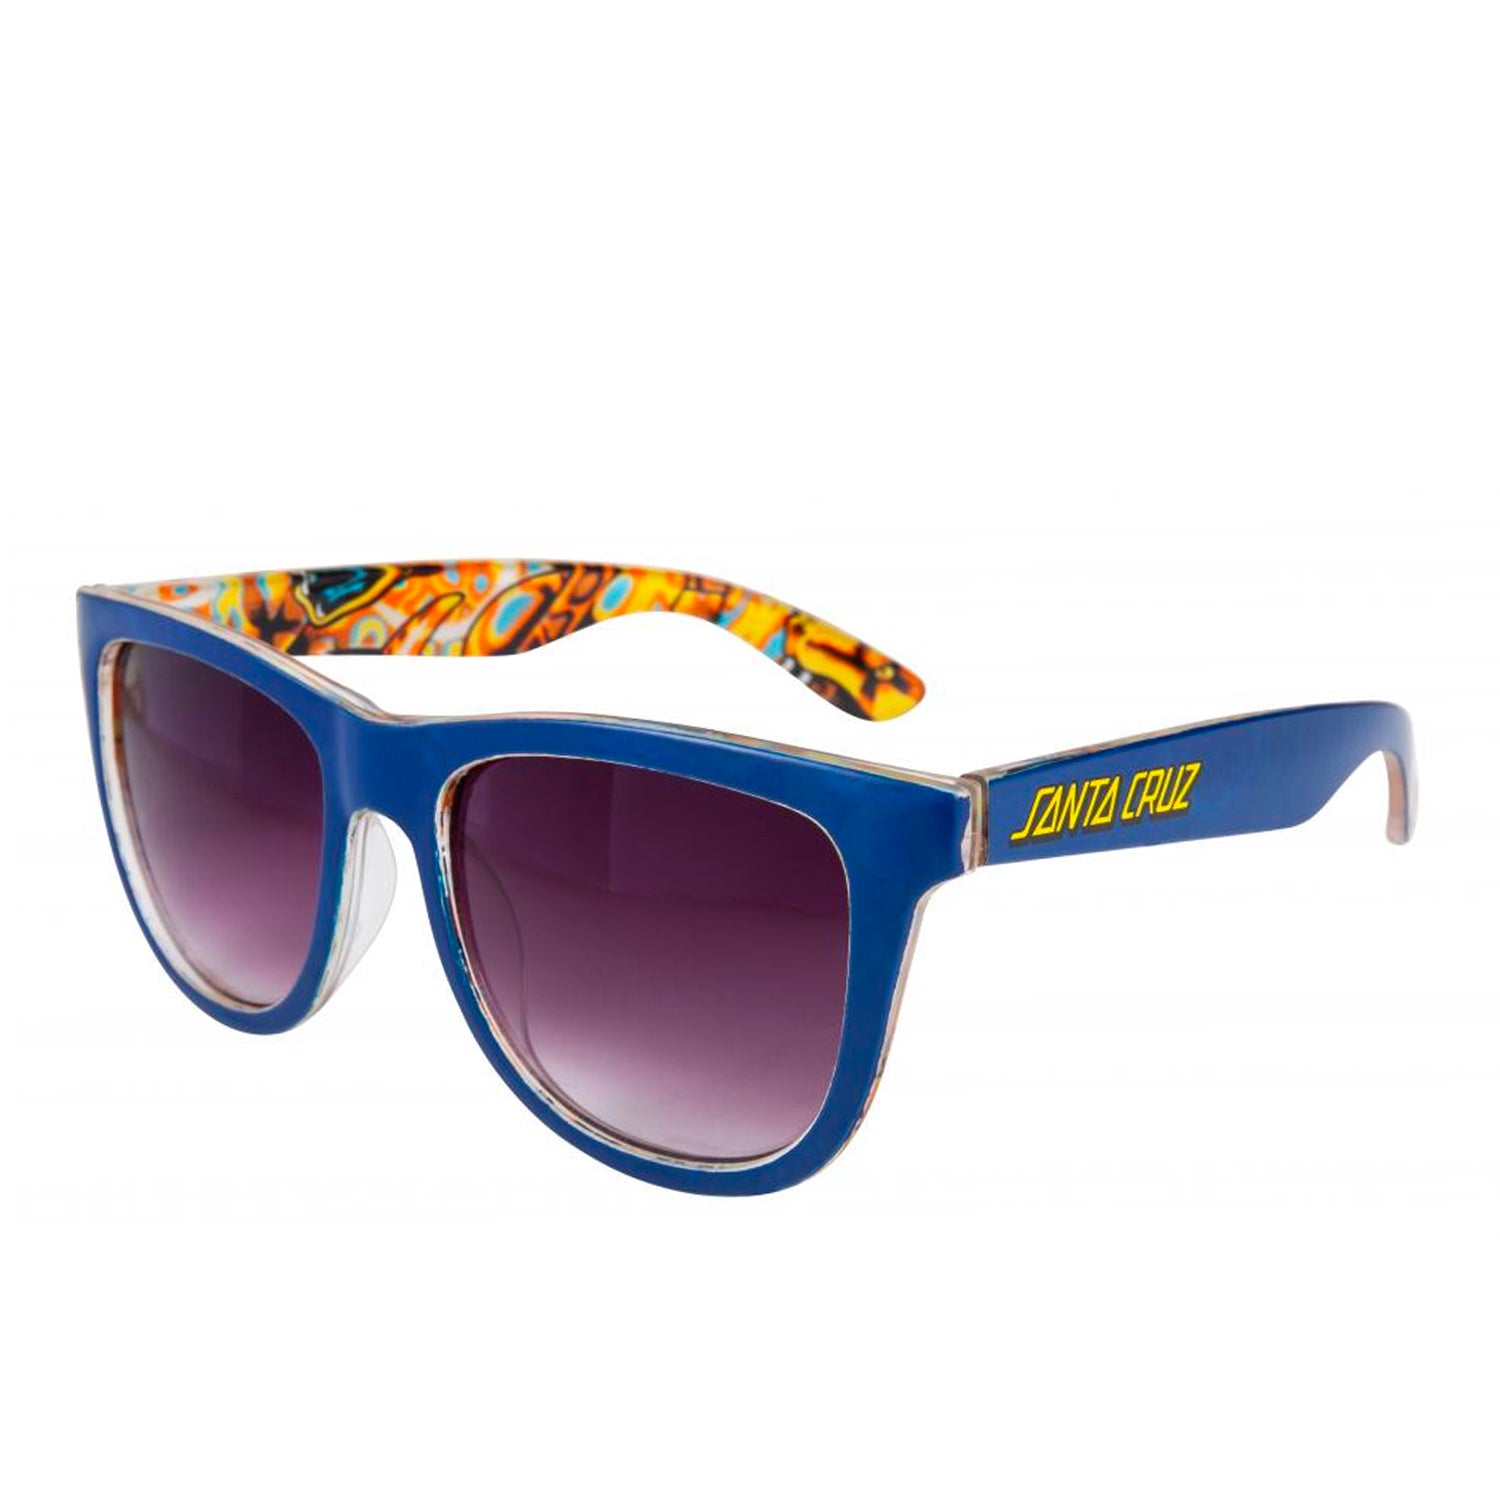 Santa Cruz Kendall Snake Sunglasses - Navy/Printed - Prime Delux Store